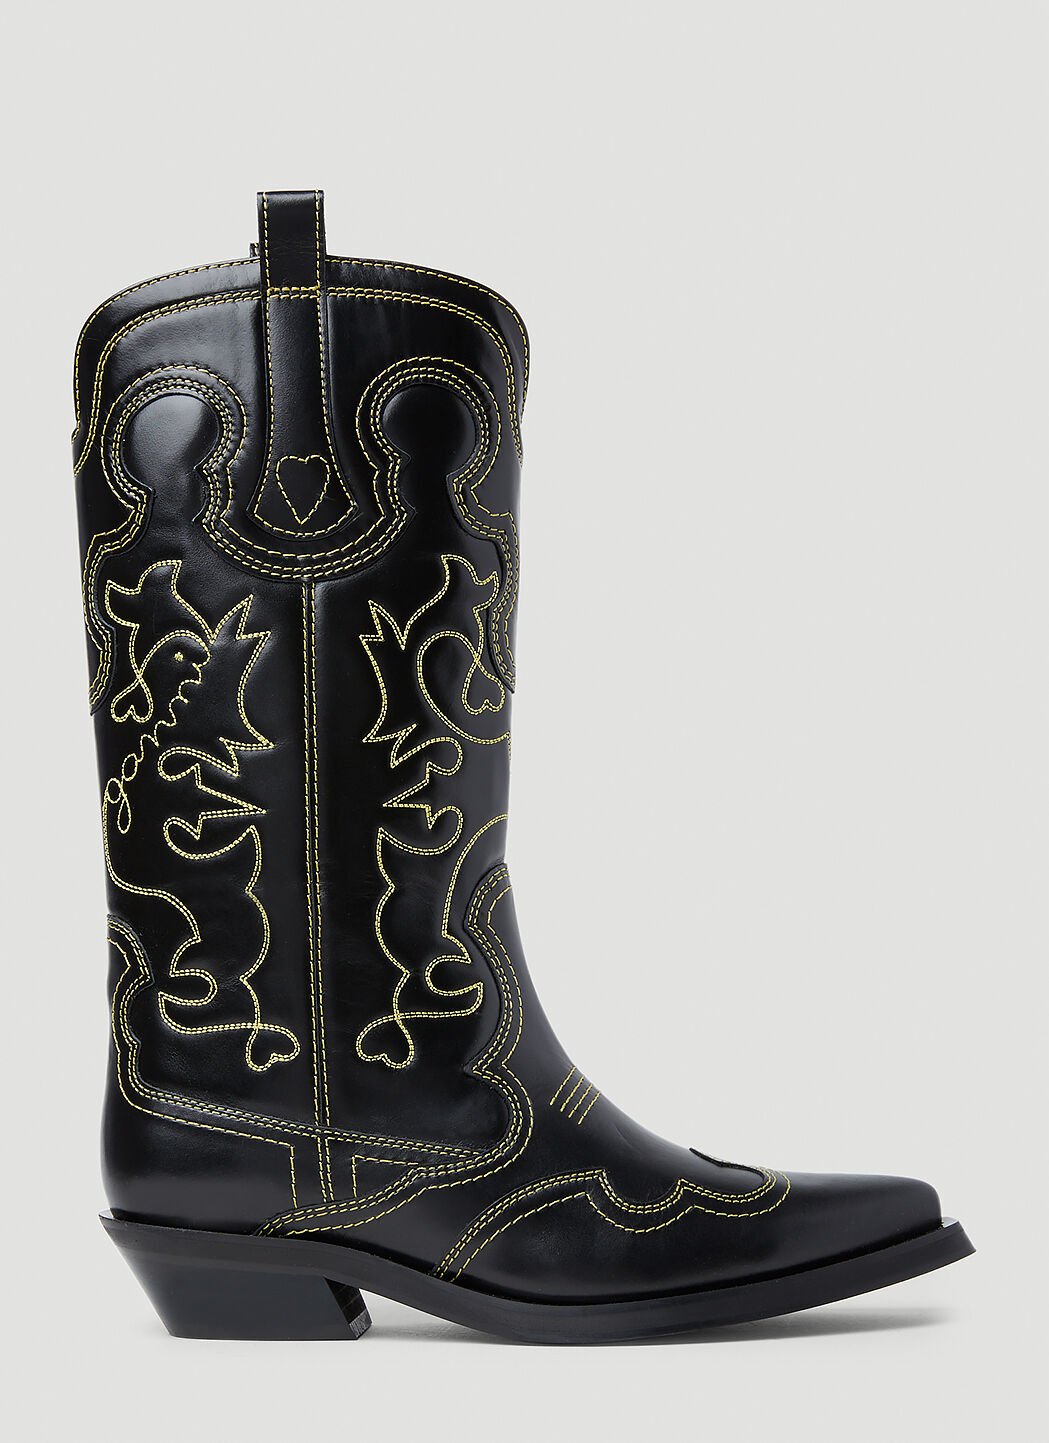 Saint Laurent Embroidered Western Boots Black sla0253007